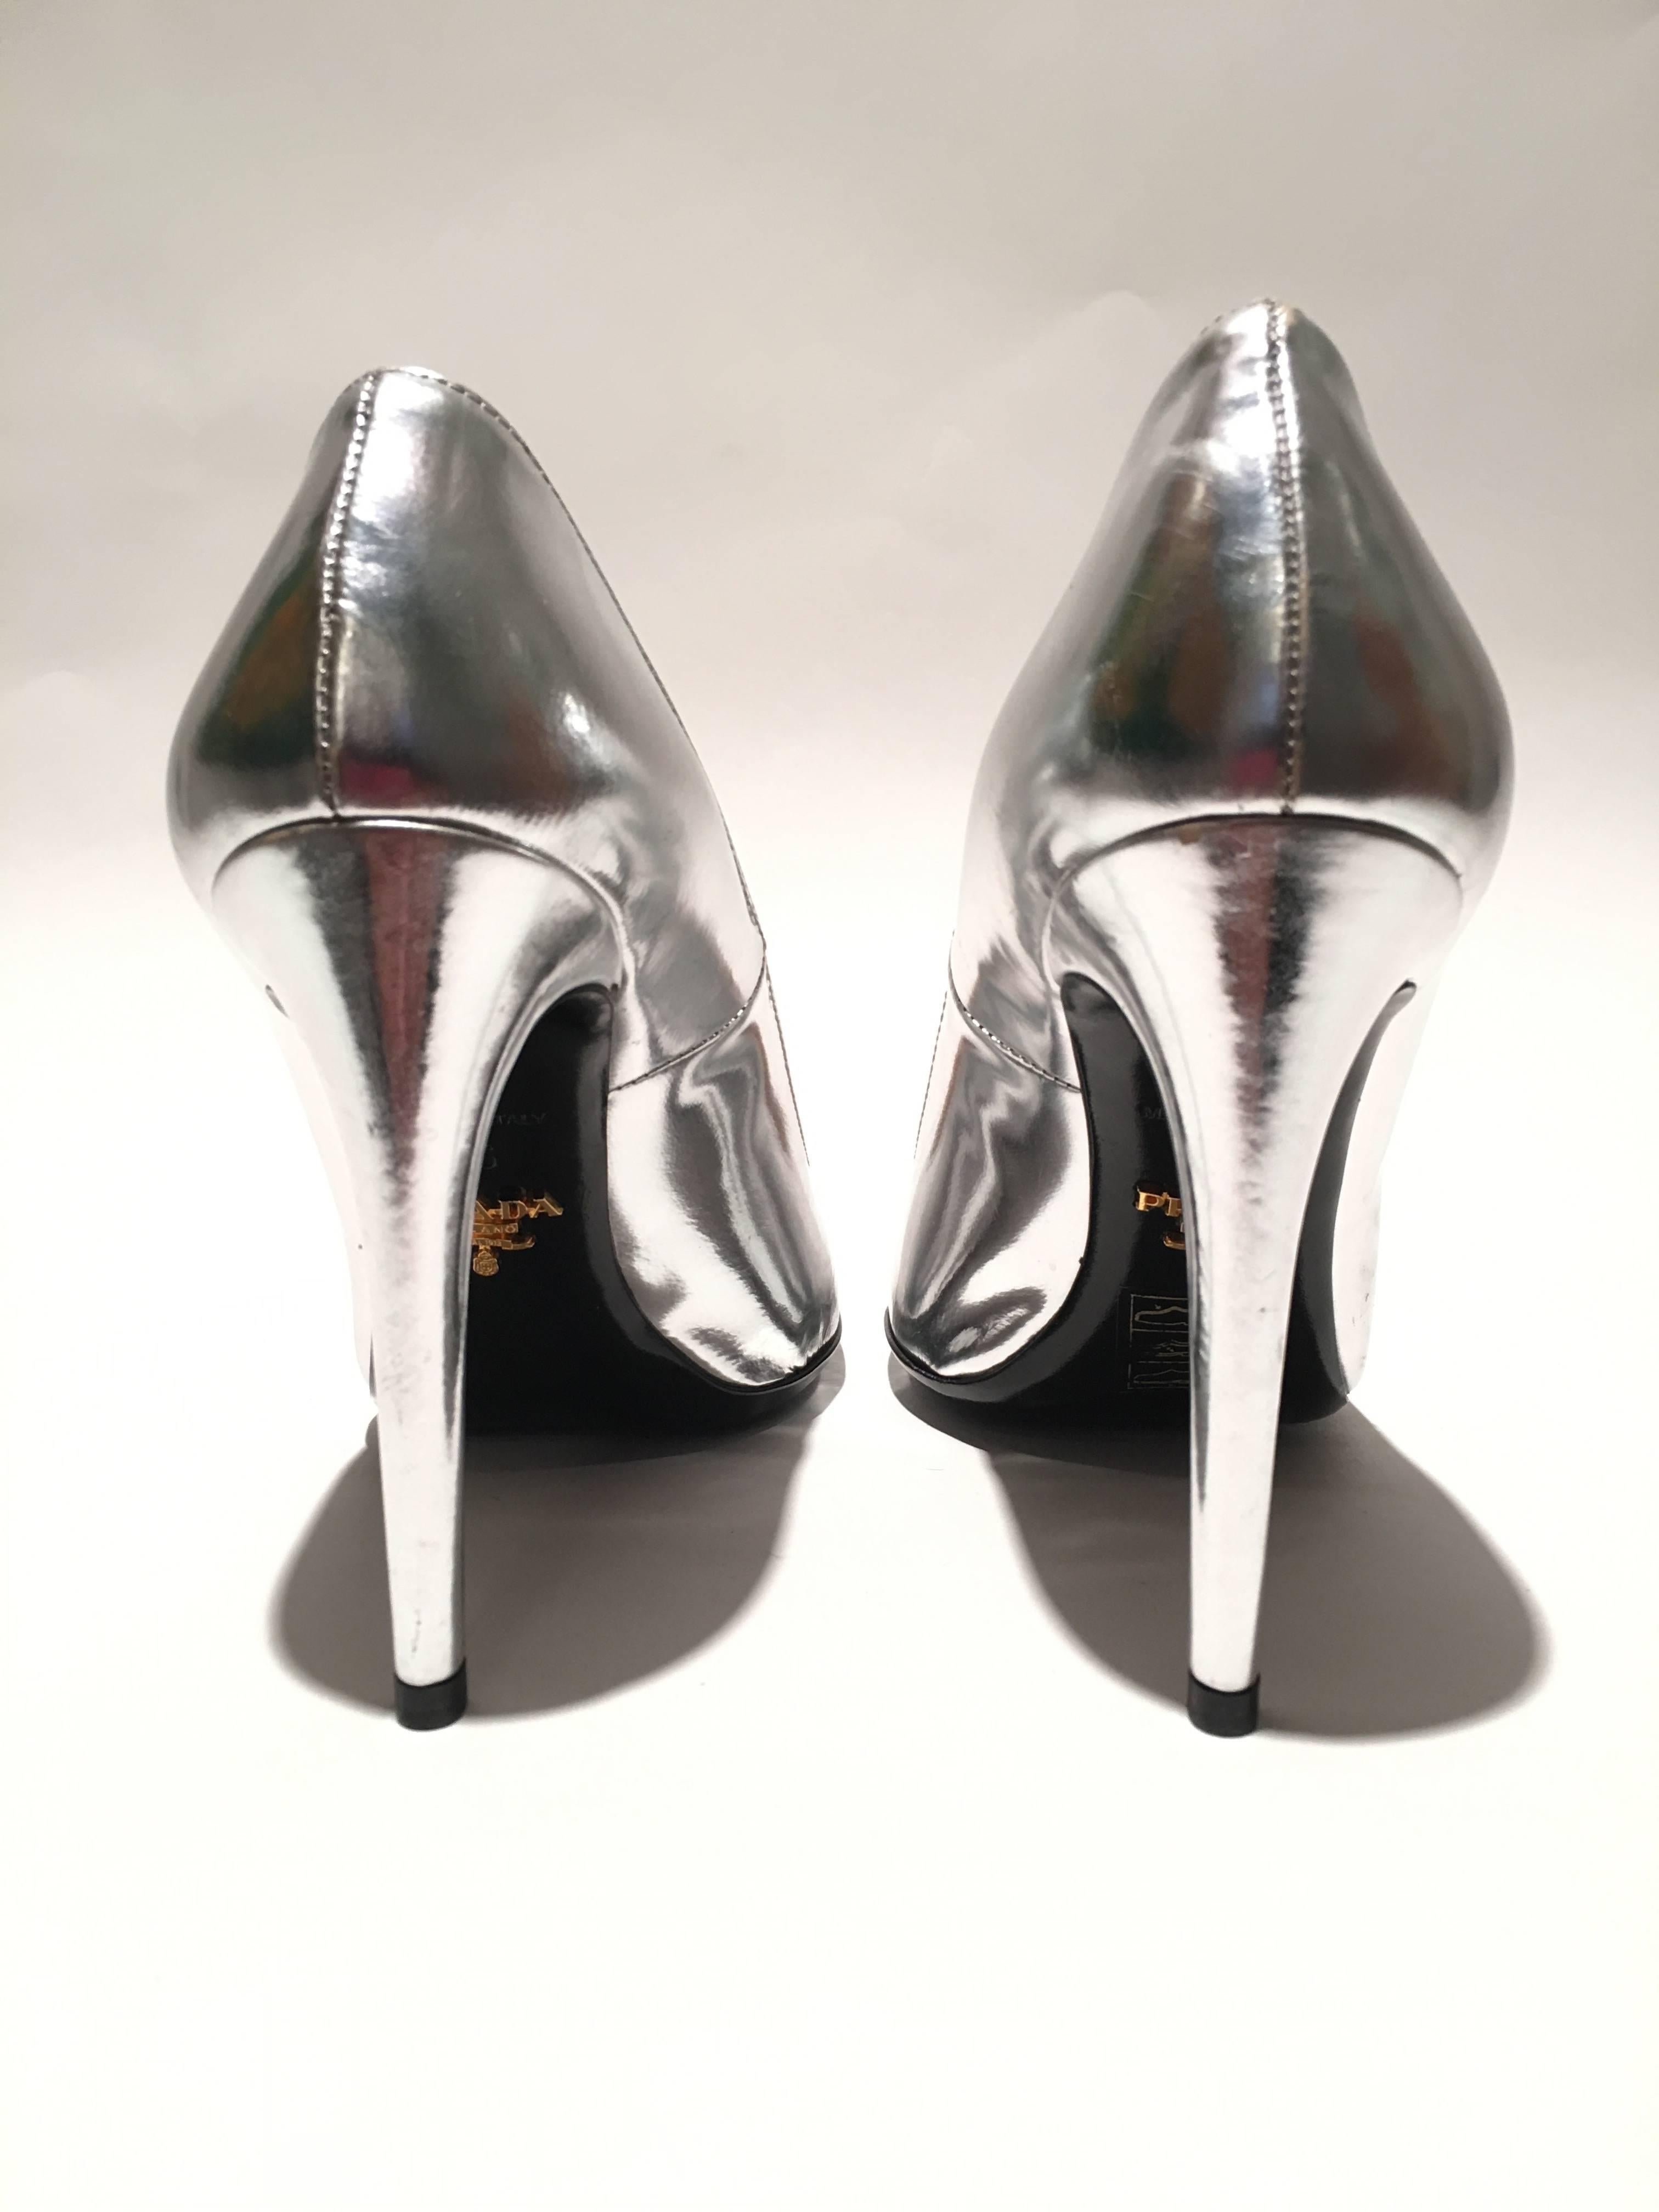 Prada Milano Silver Metallic Heels with a 4